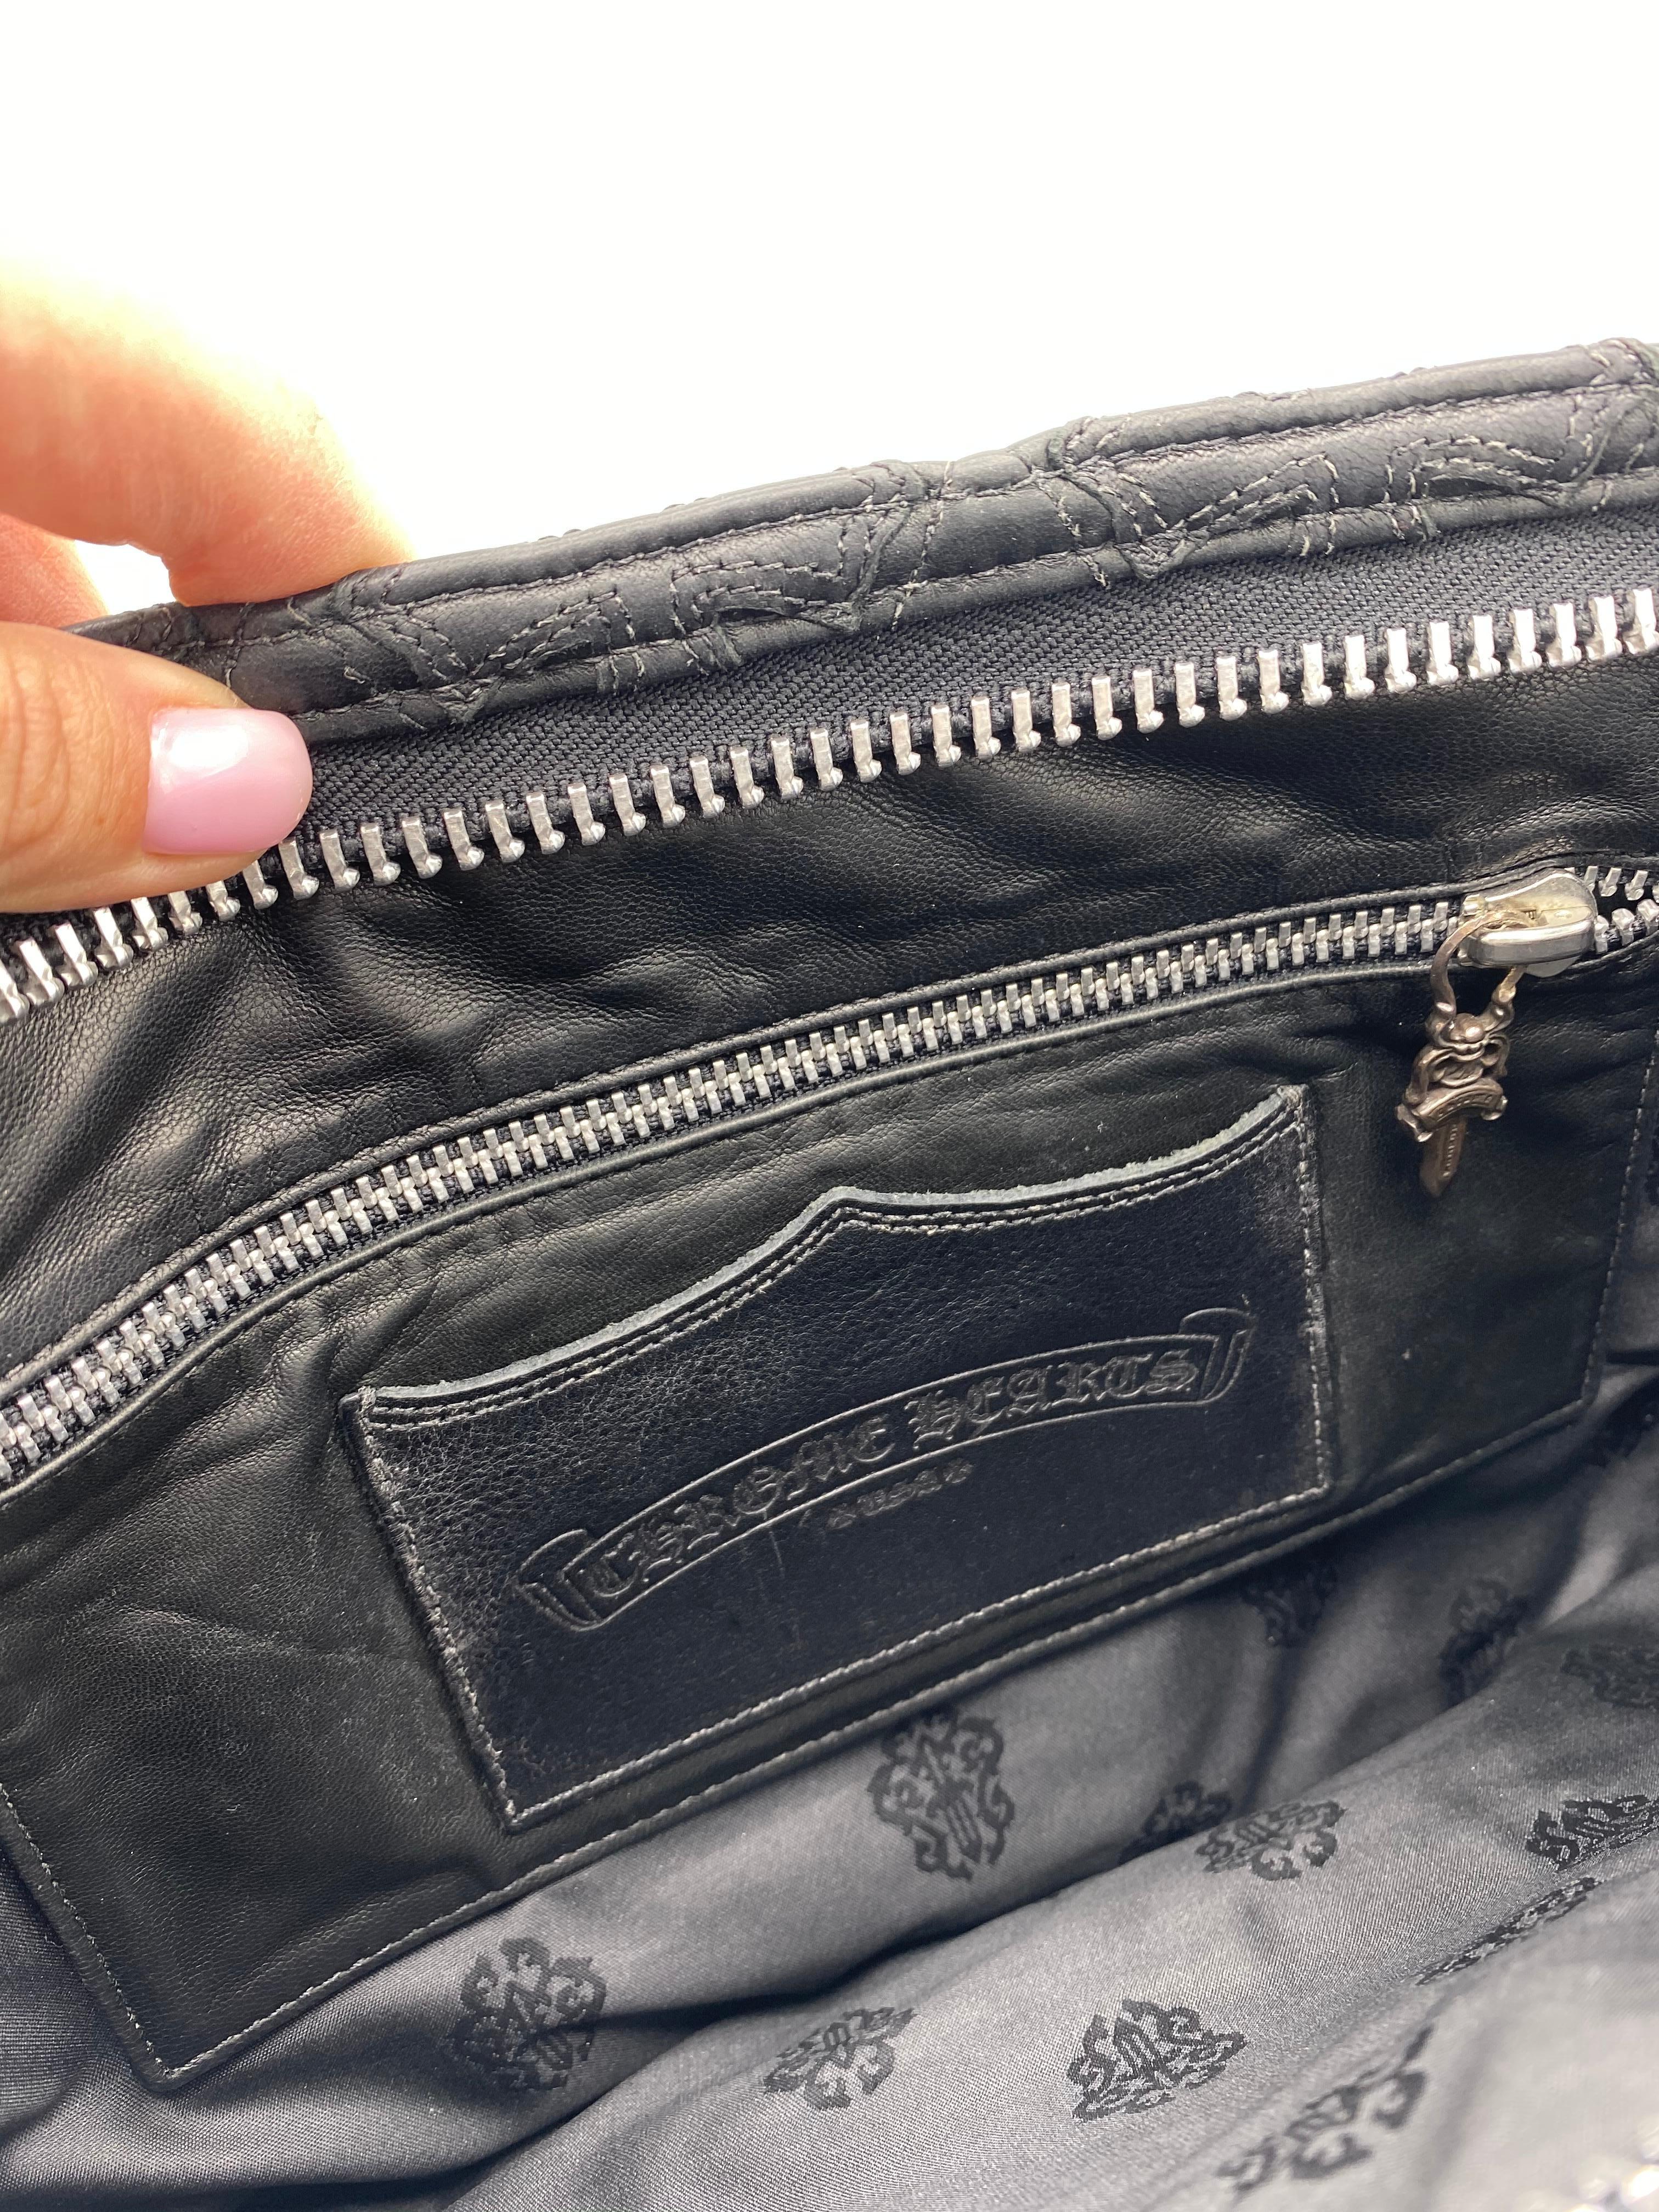 Vintage Chrome Hearts Black Leather and Sterling Silver Clutch Handbag ...